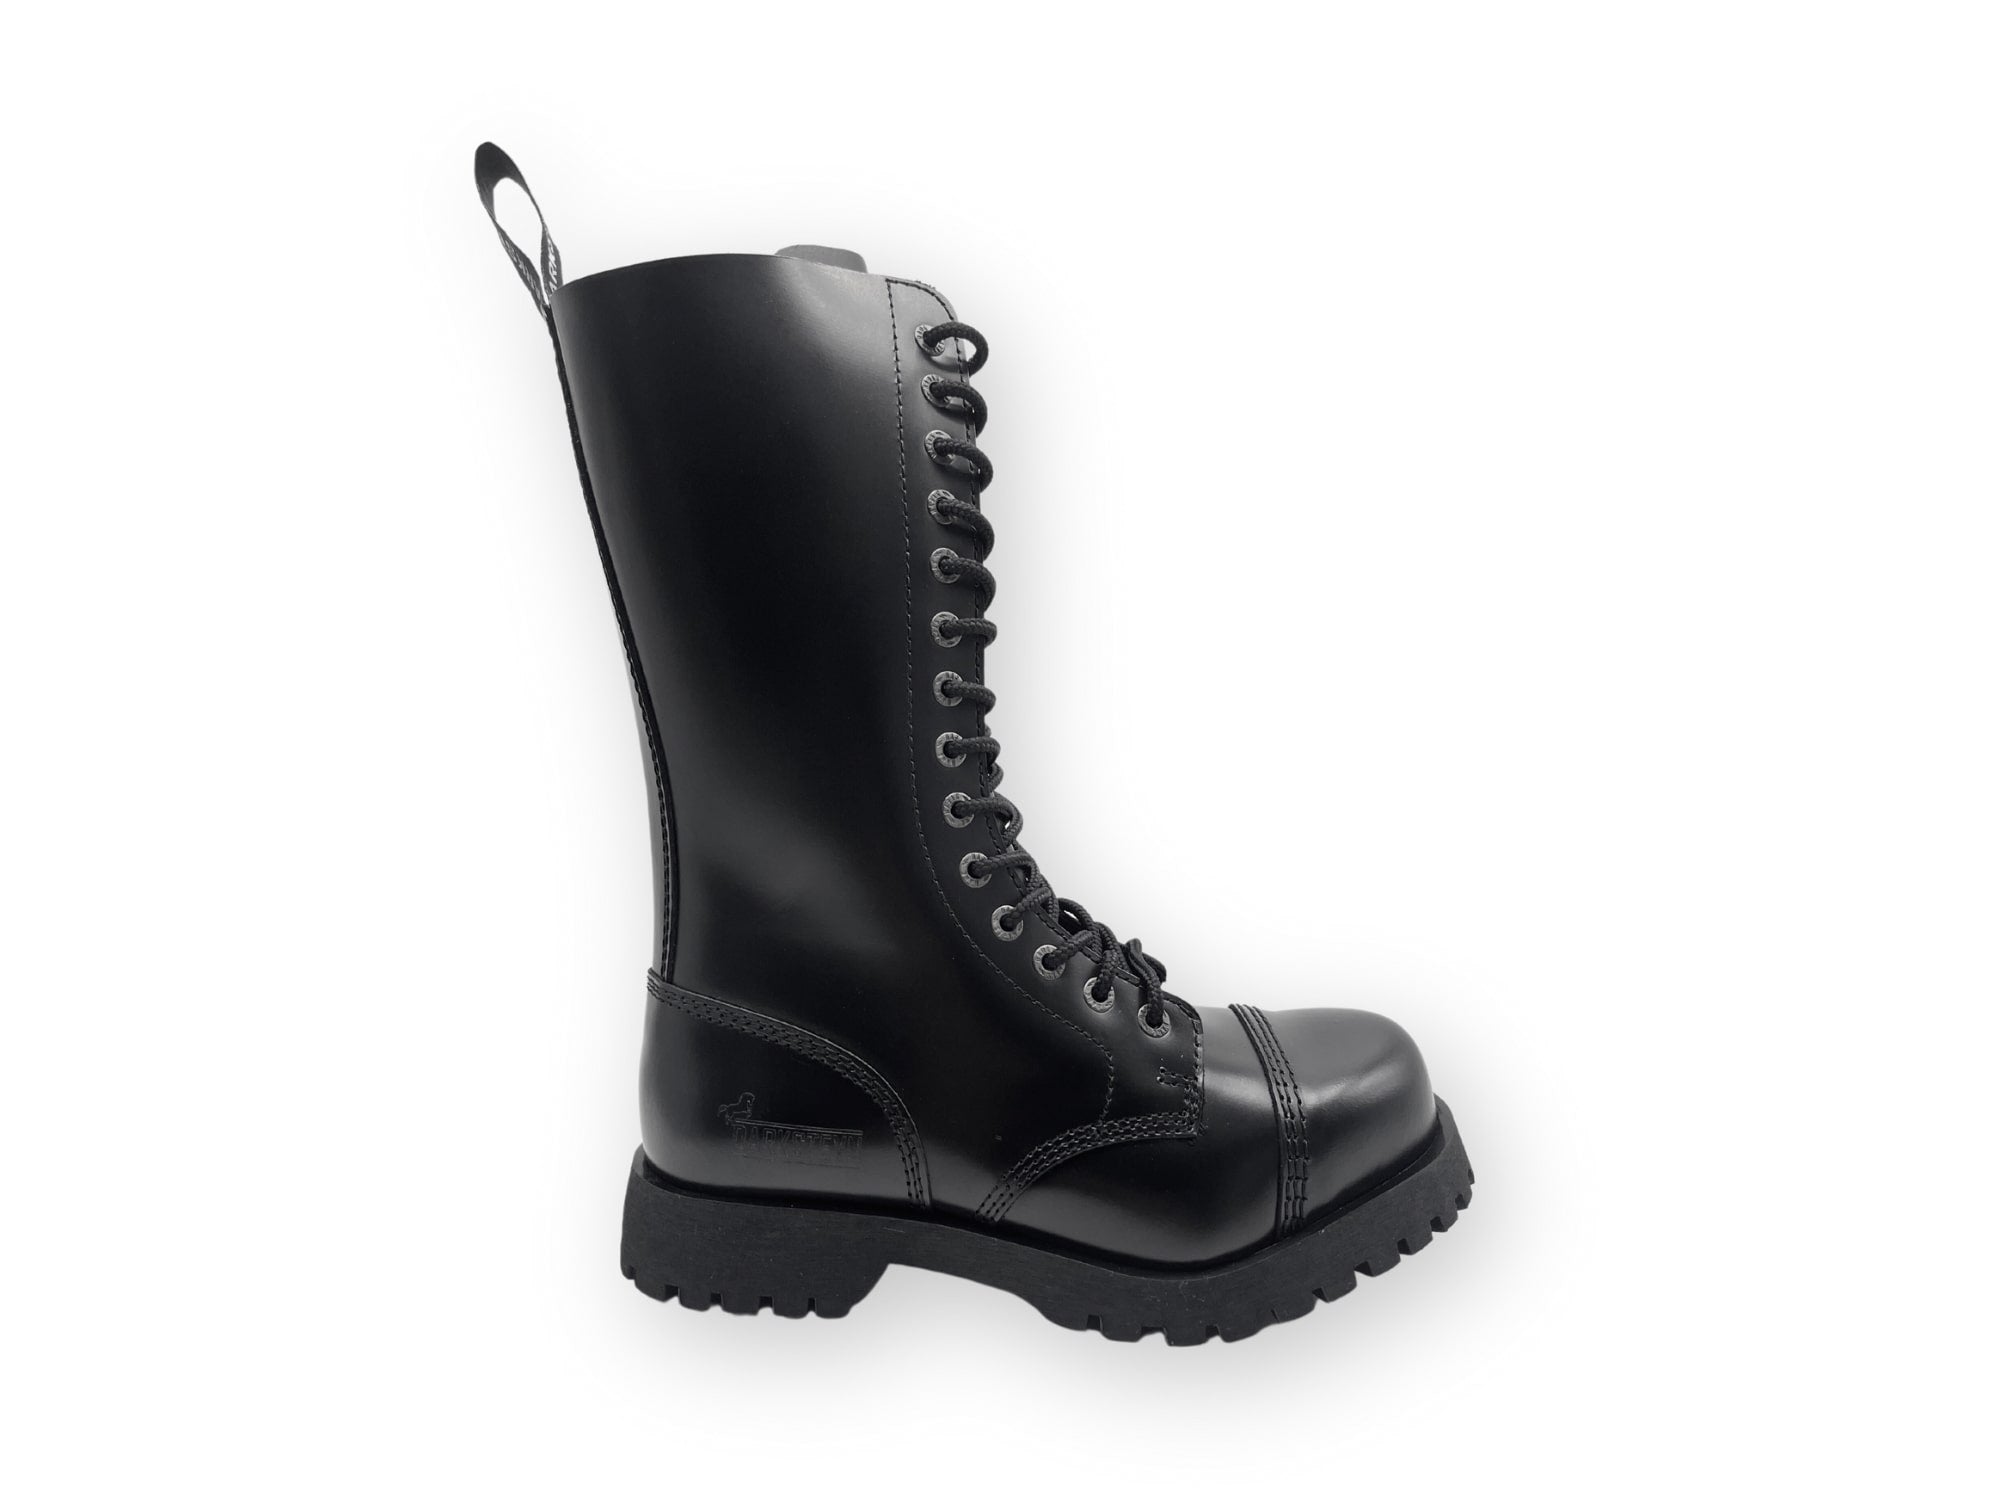 Darksteyn Shoes 14 Eye Ranger Premium Boots Black